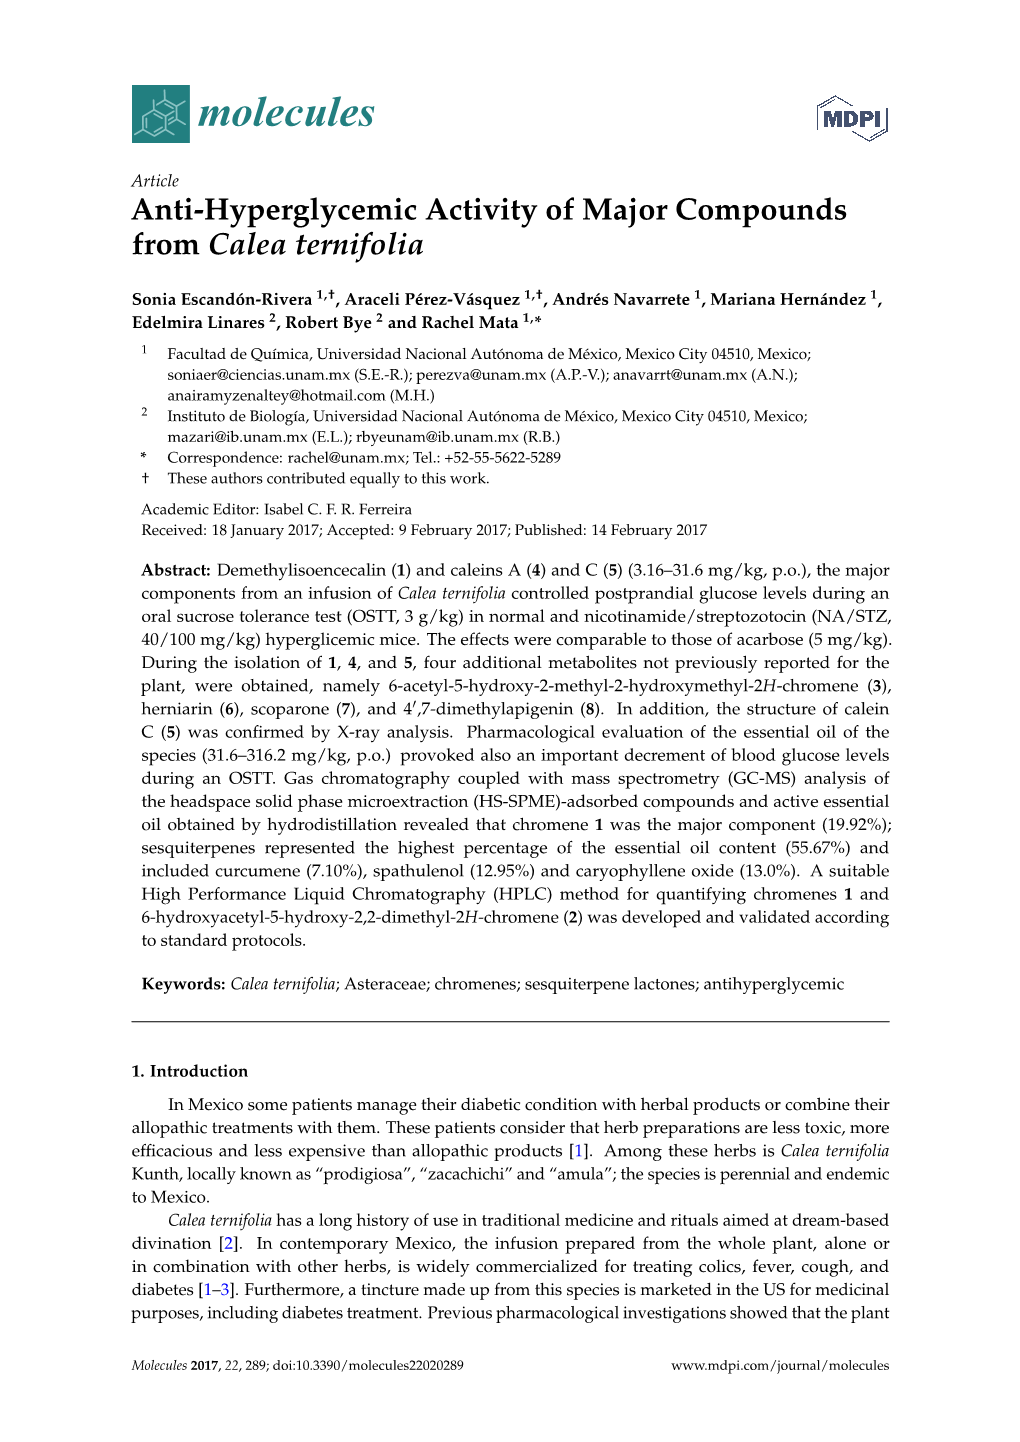 Anti-Hyperglycemic Activity of Major Compounds from Calea Ternifolia